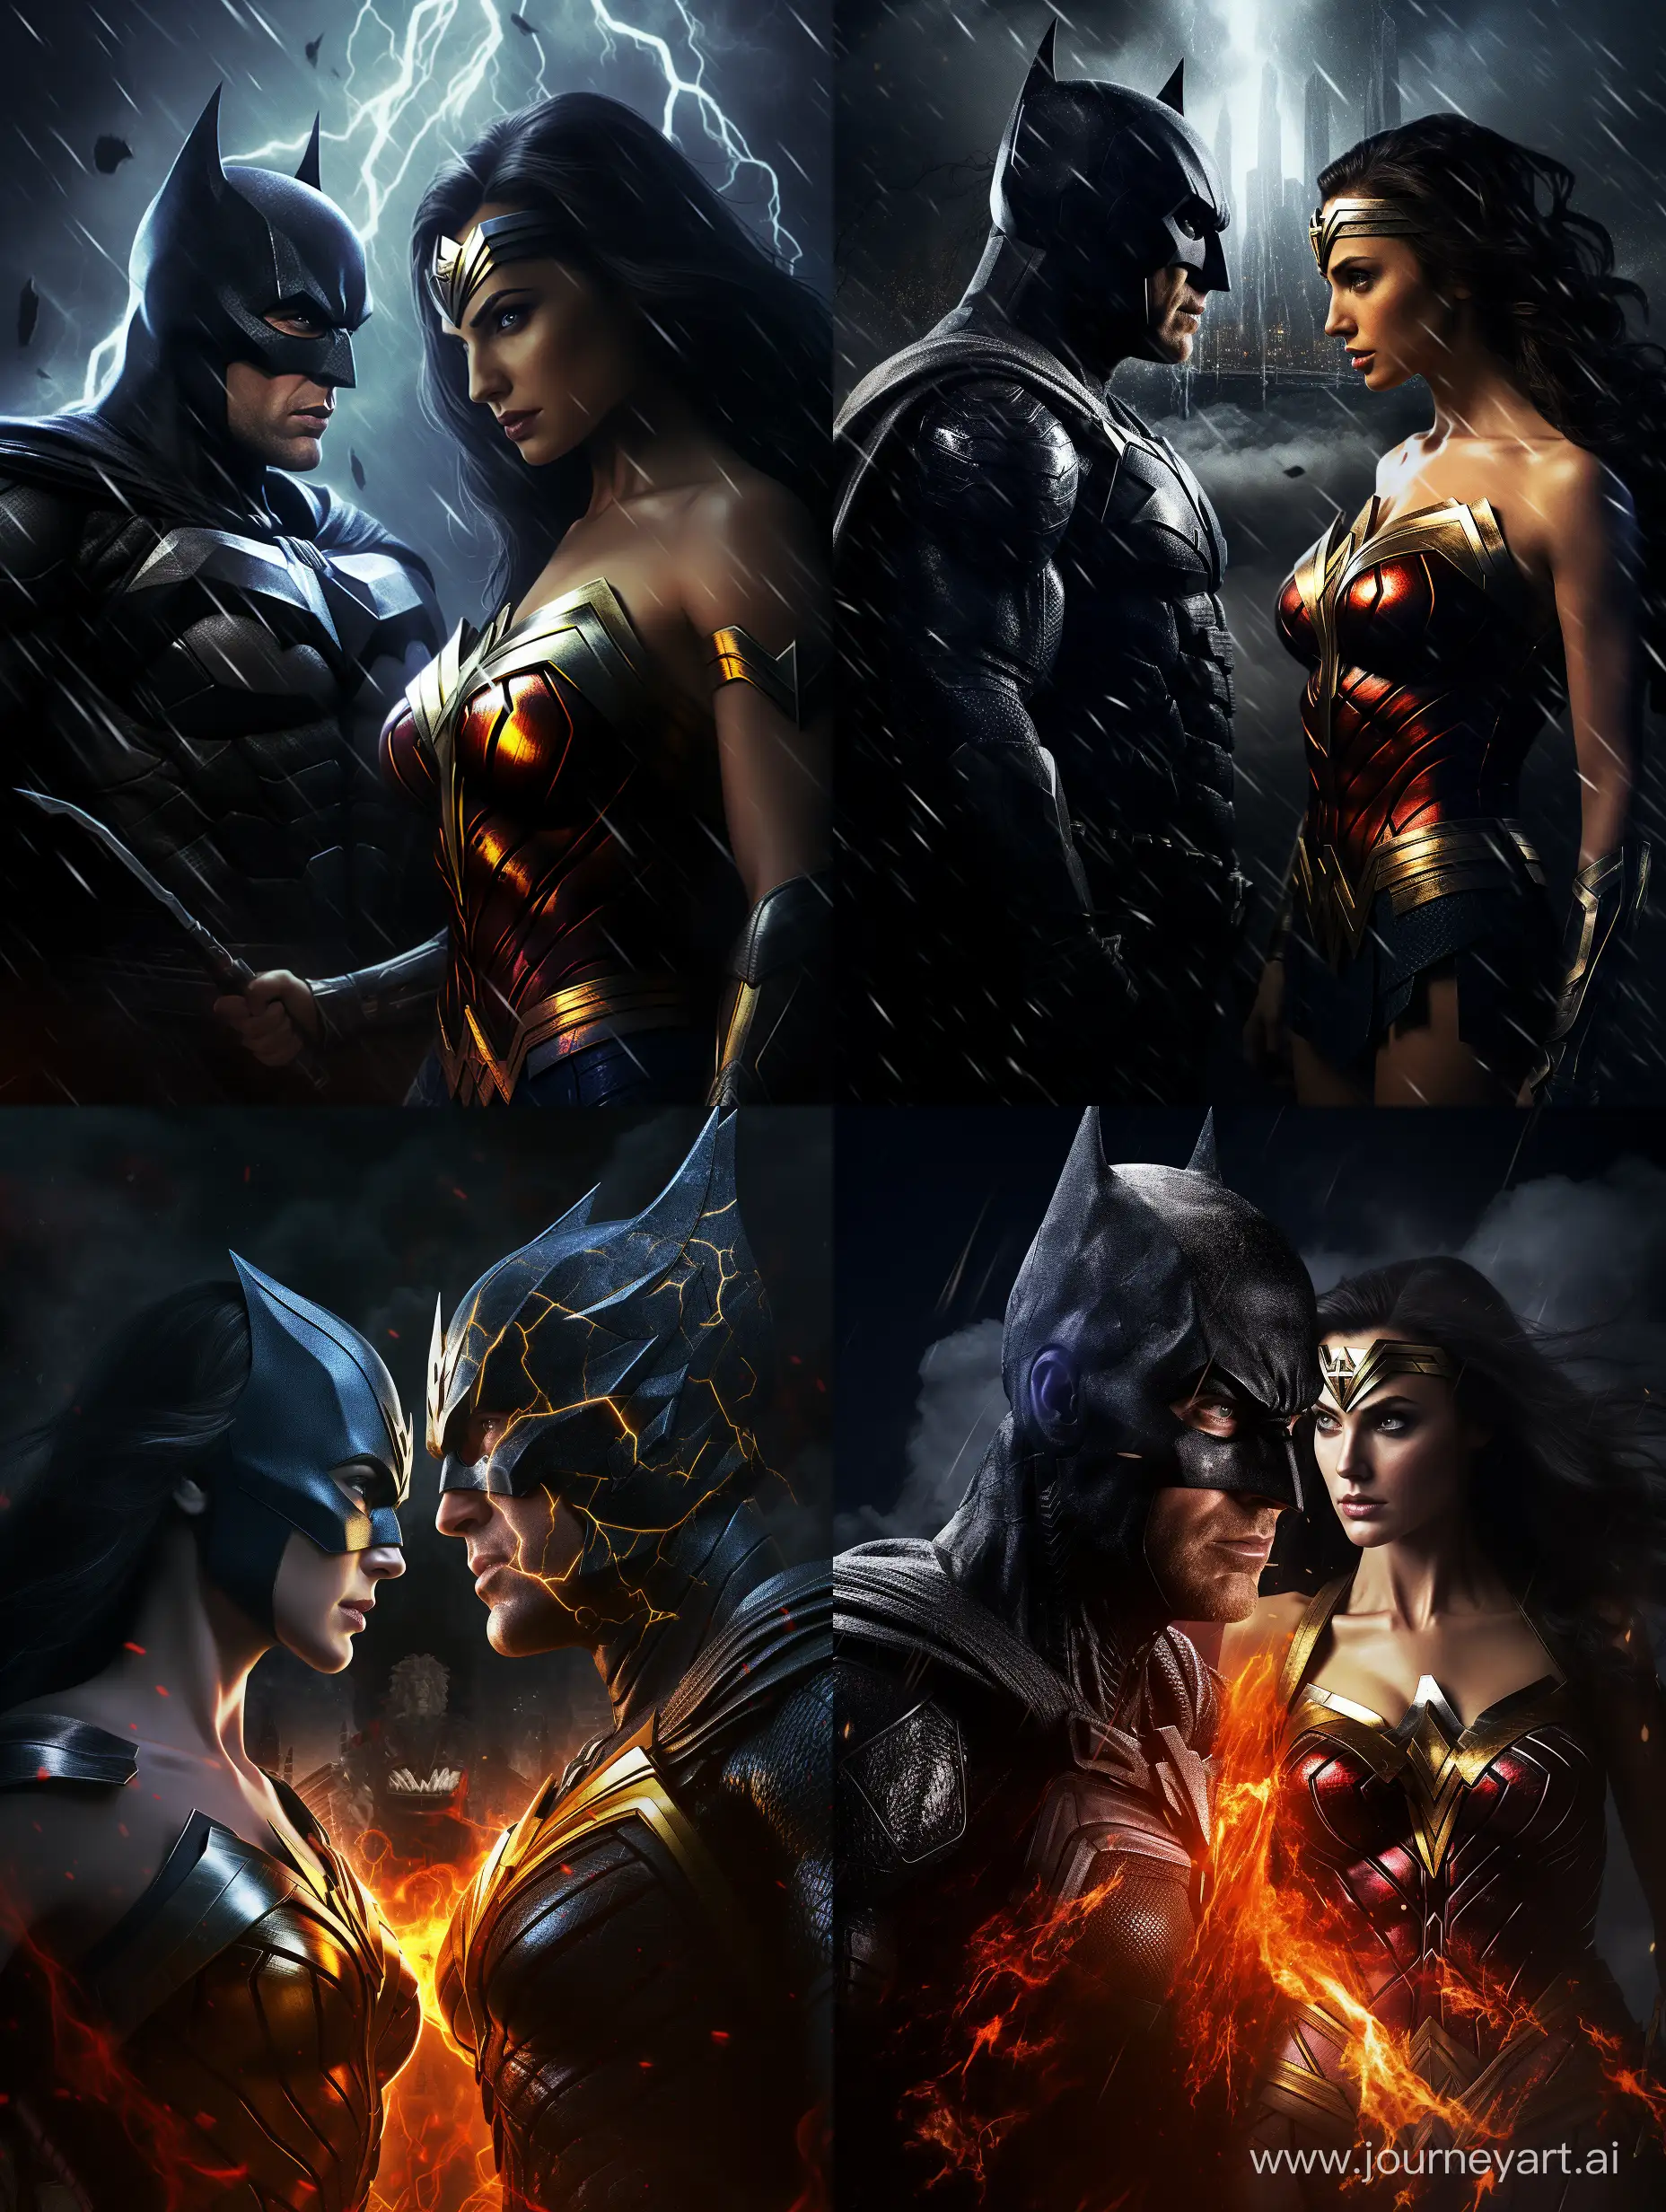 Epic-Batman-vs-Wonder-Woman-Clash-Movie-Poster